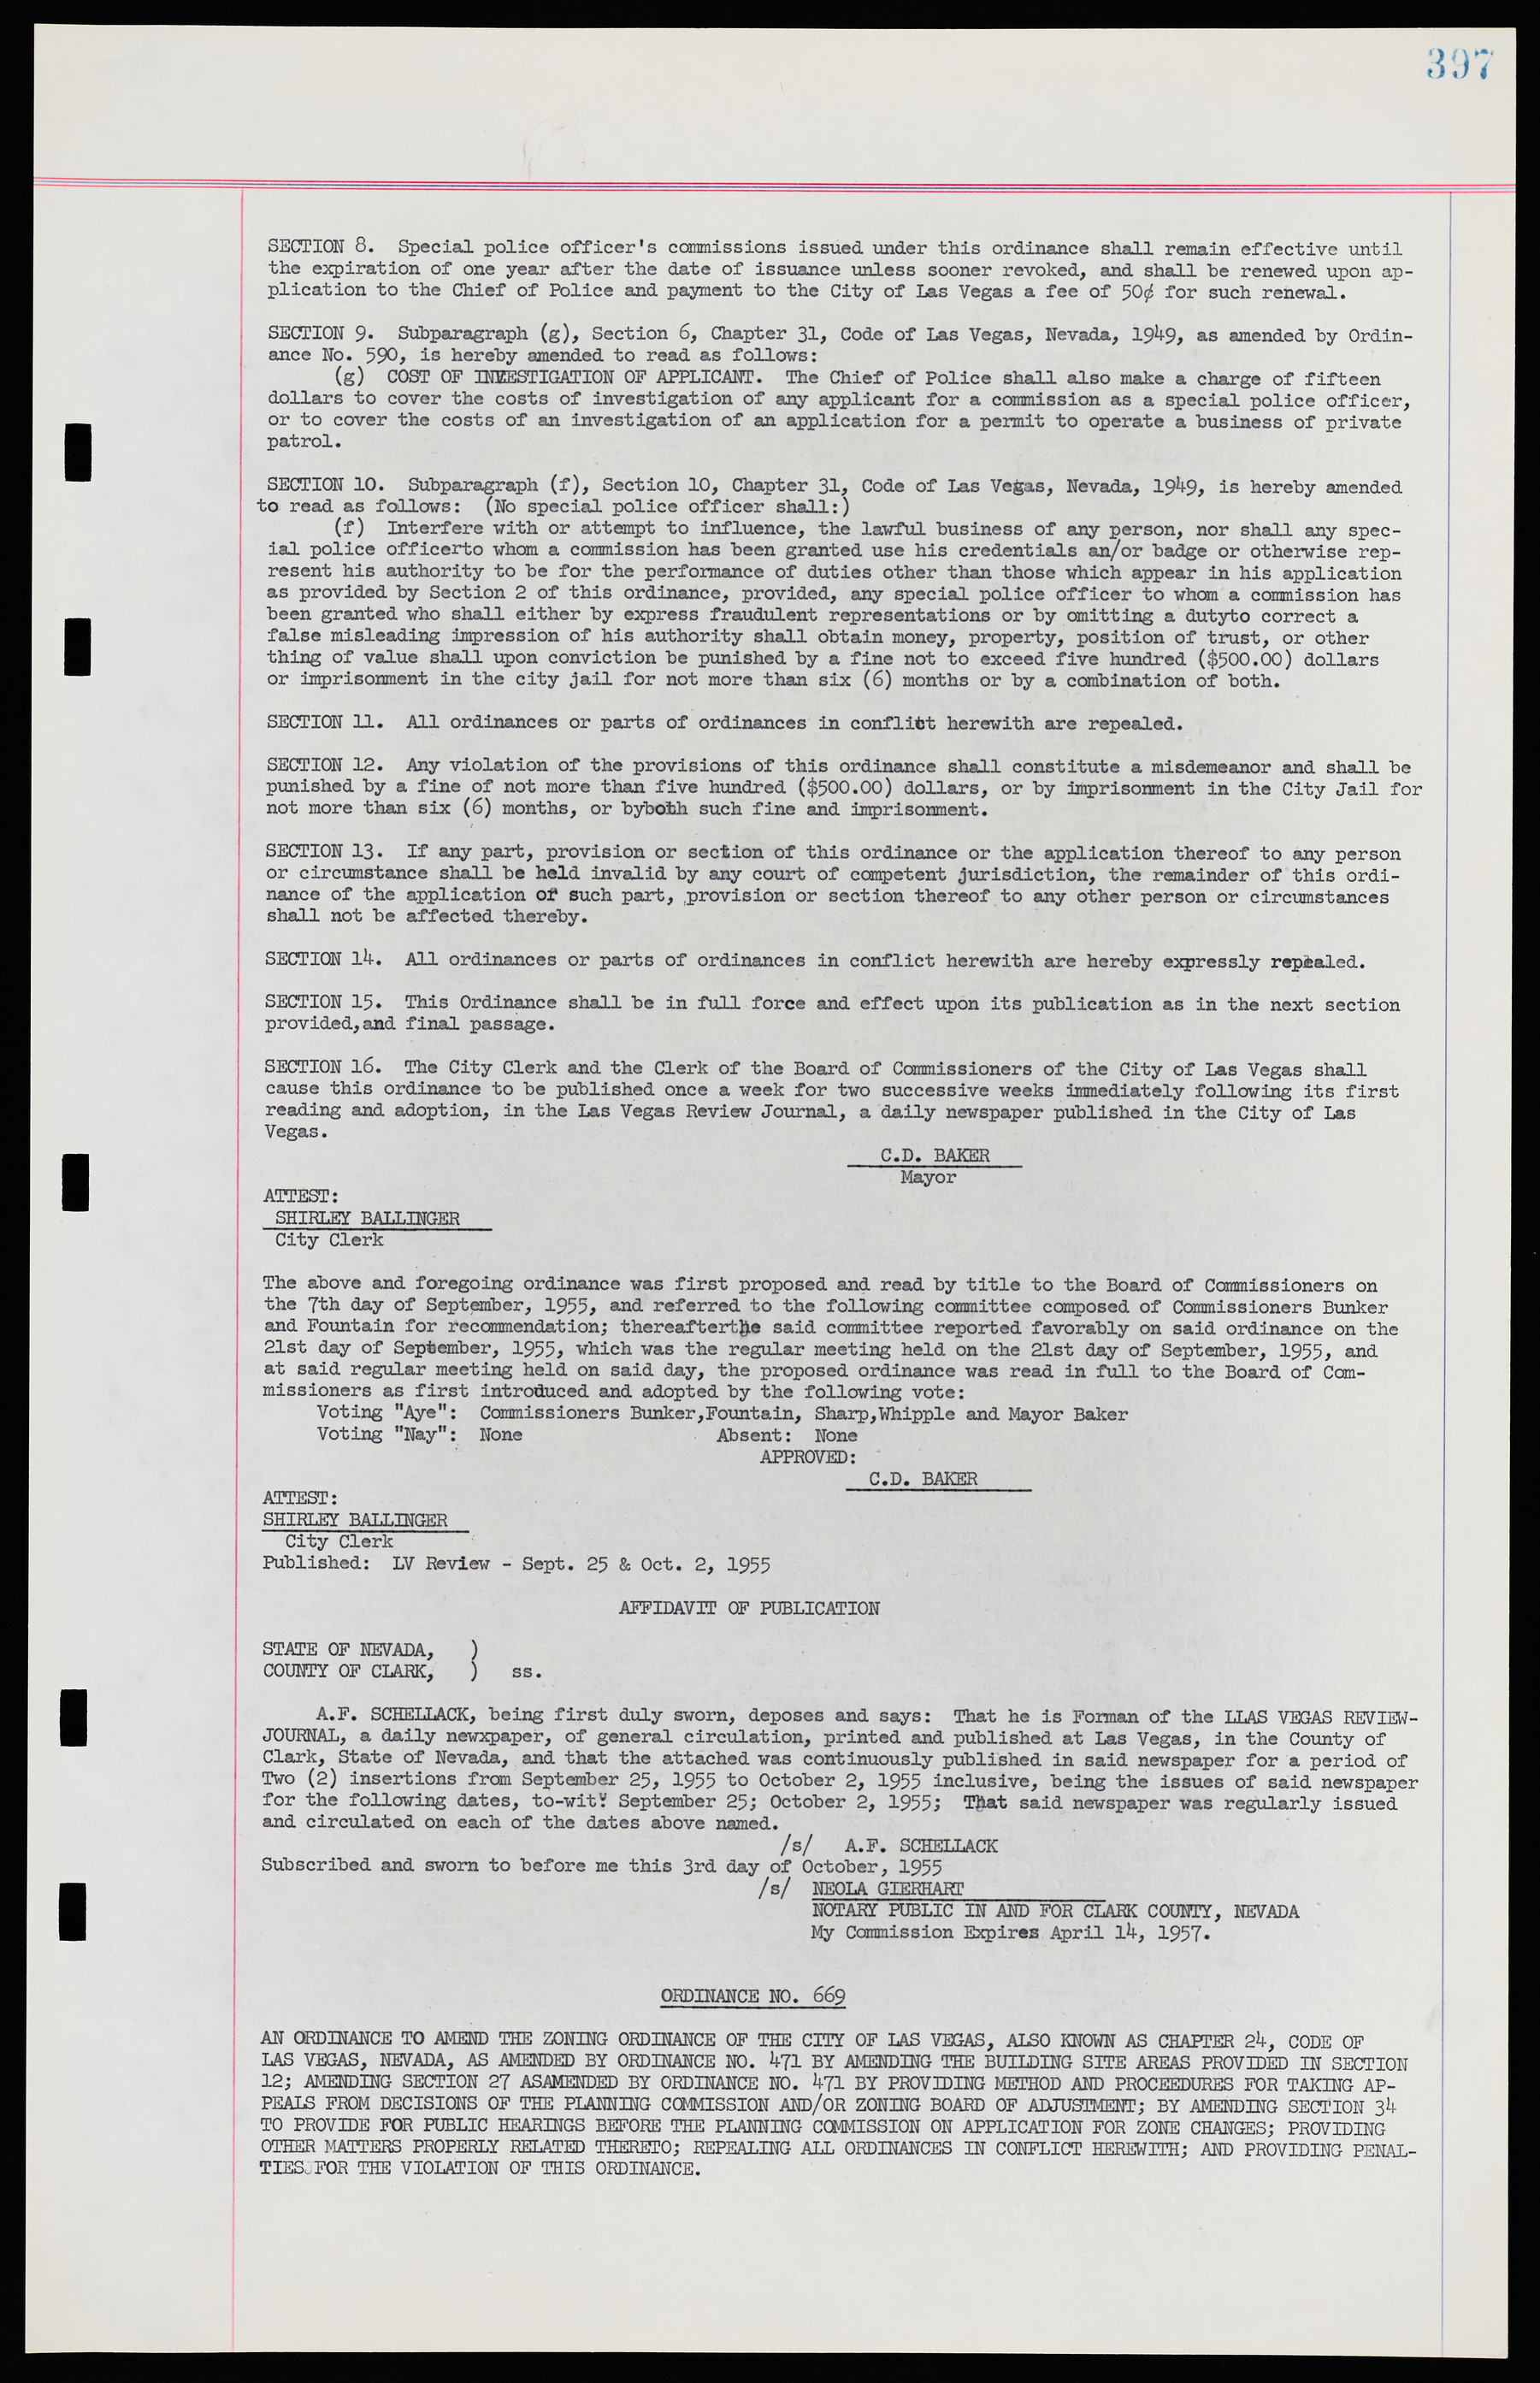 Las Vegas City Ordinances, November 13, 1950 to August 6, 1958, lvc000015-405